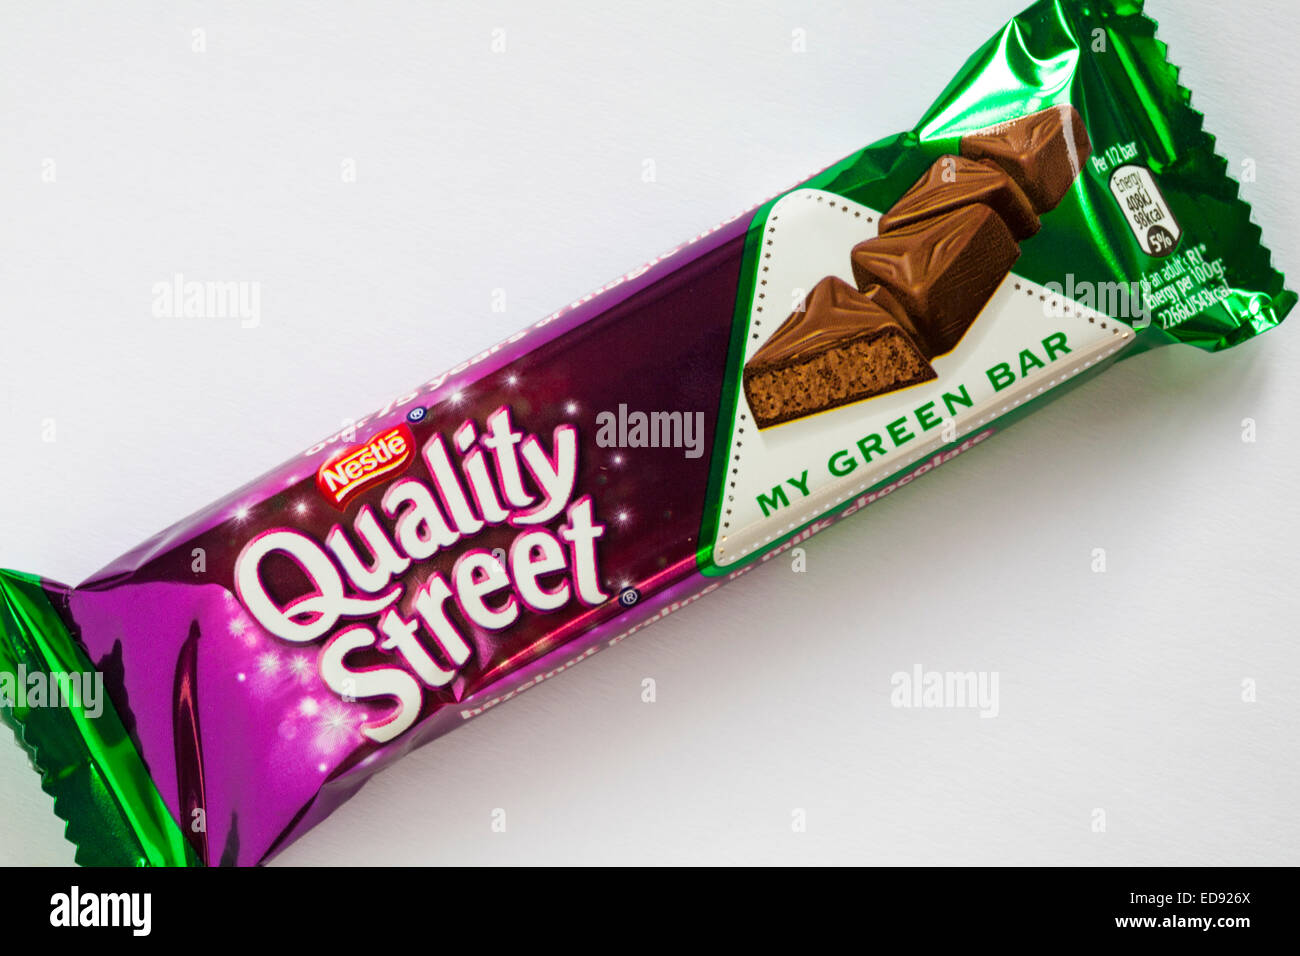 Quality street chocolats - Nestlé